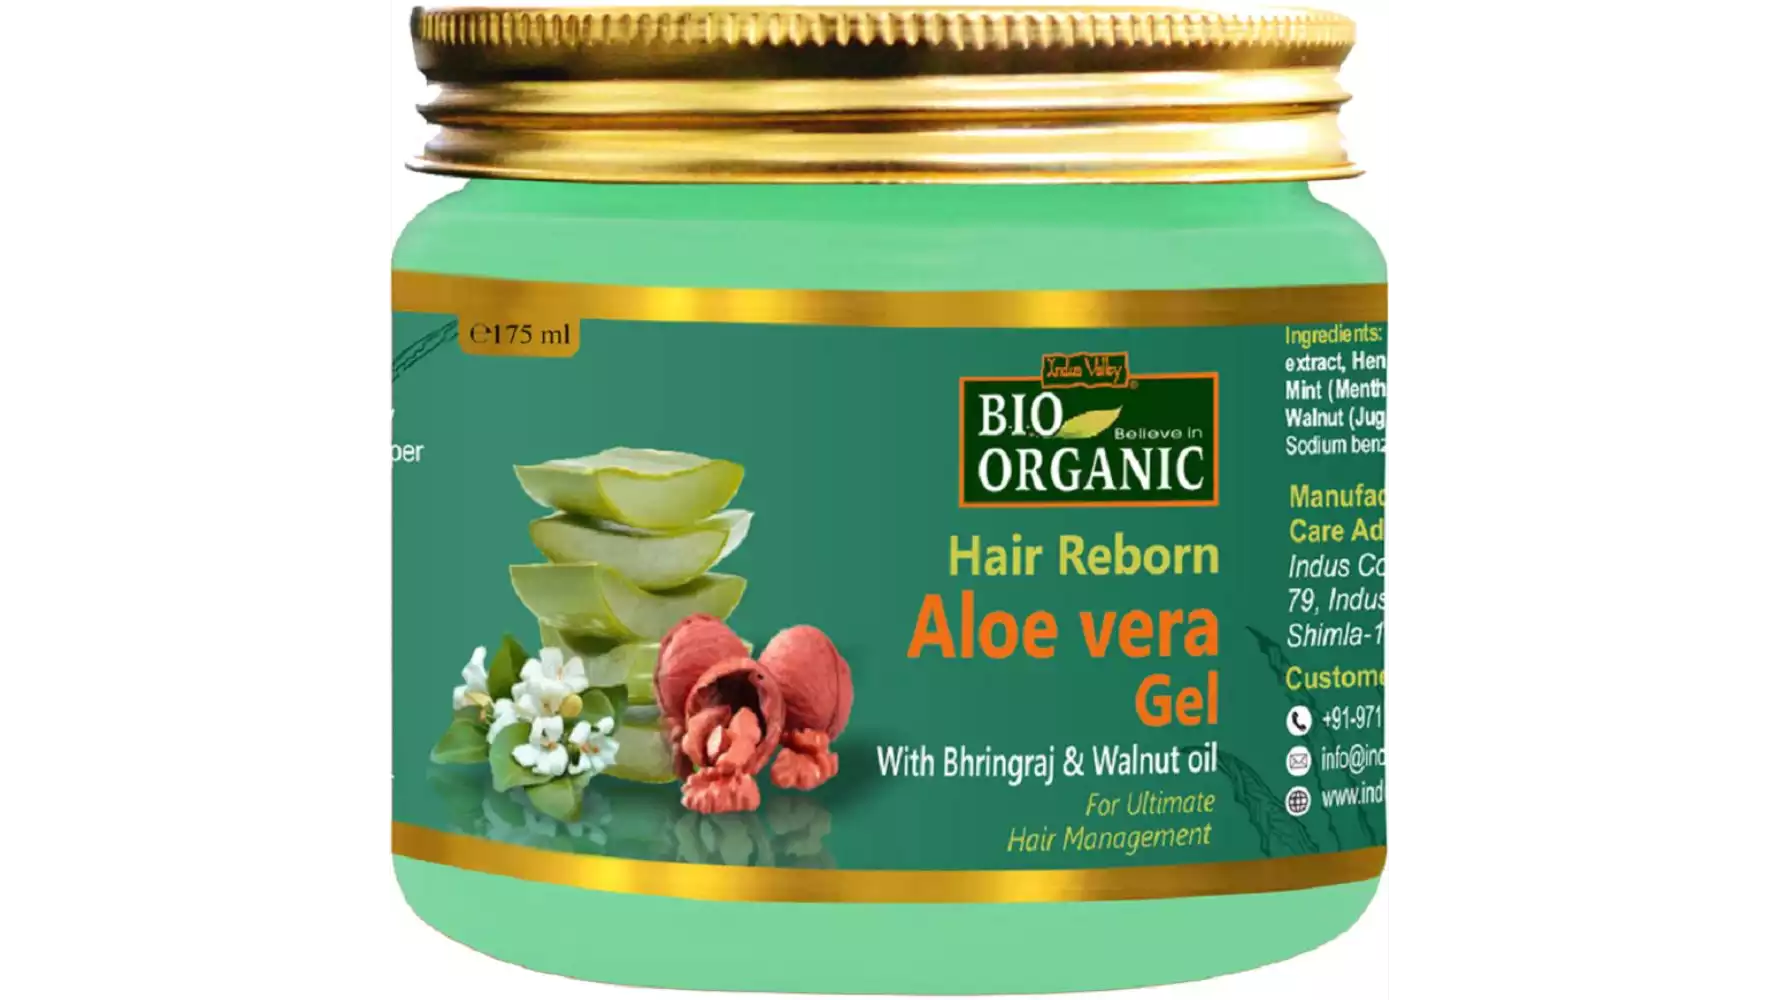 Indus valley Bio Organic Hair Reborn Aloe Vera Gel With Bhringraj & Walnut Oil (175ml)